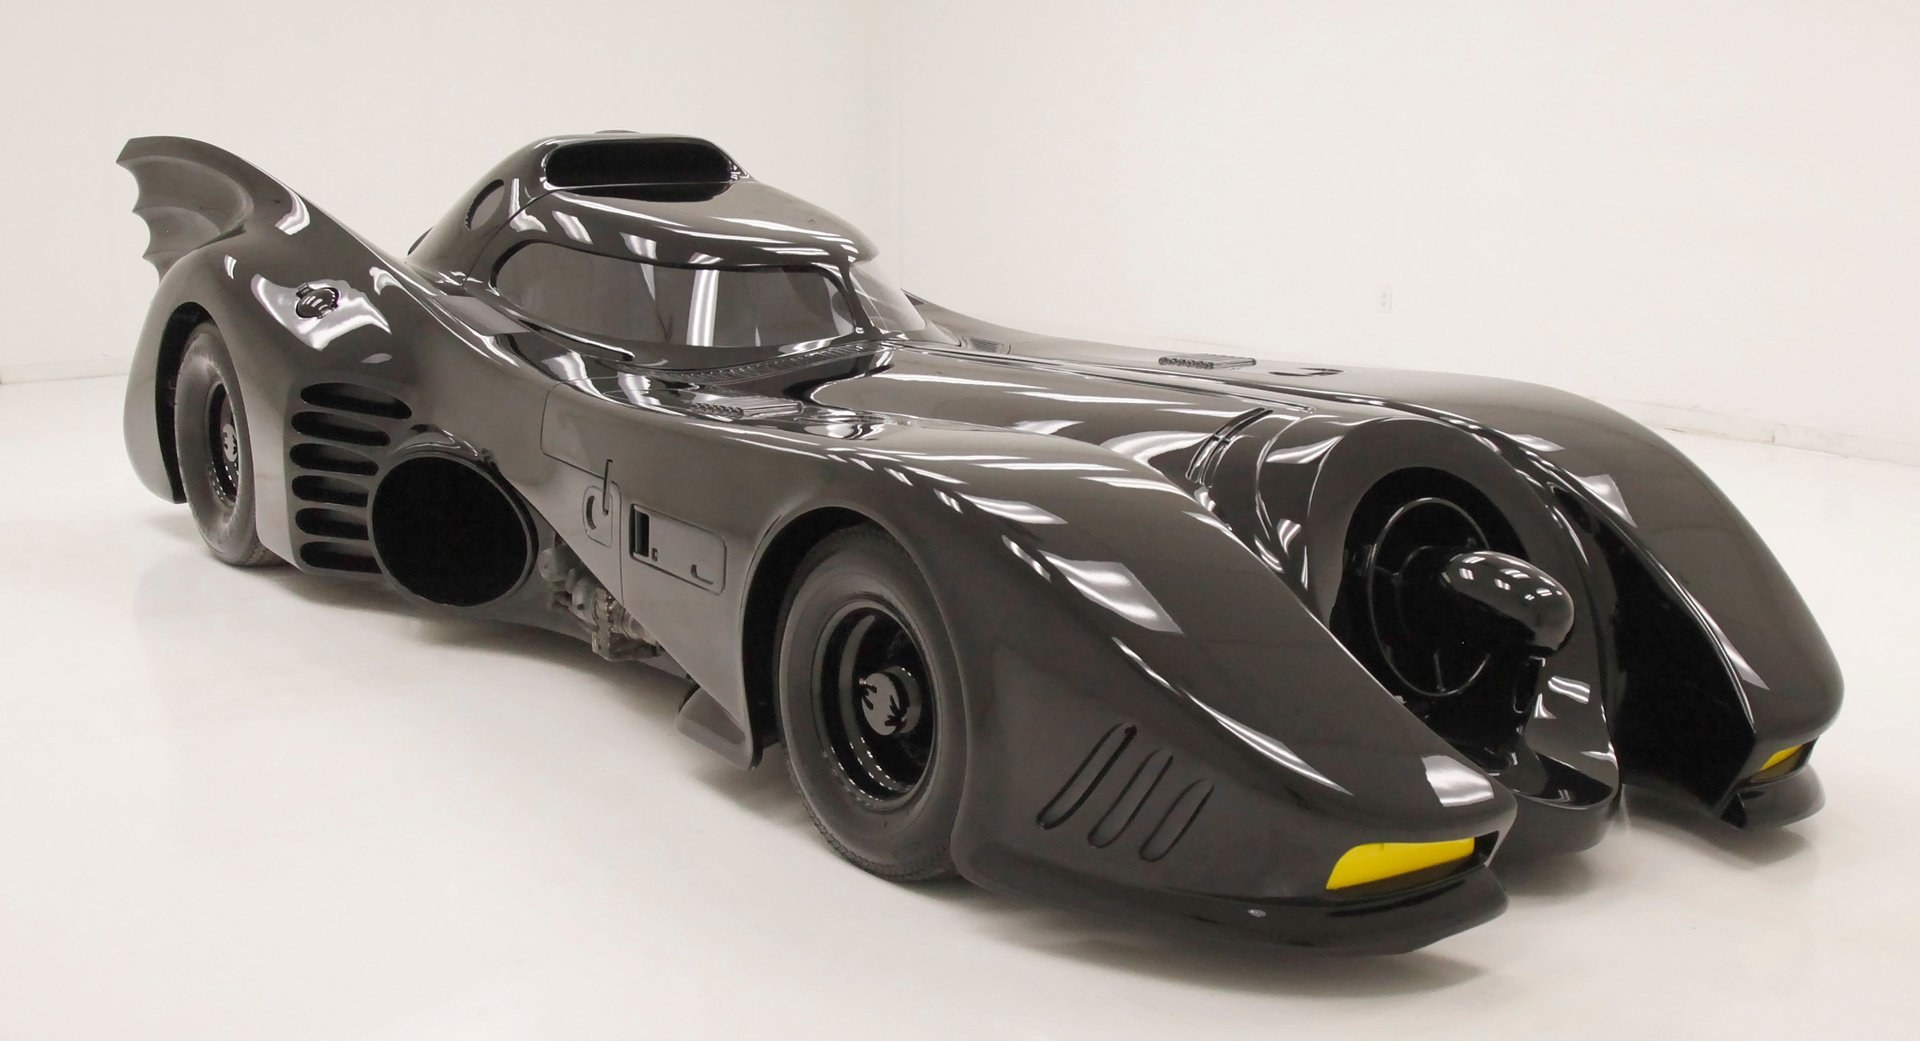 1989 Batmobile Original Prop Is for Sale, Costs Way More Than a Few  Replicas - autoevolution